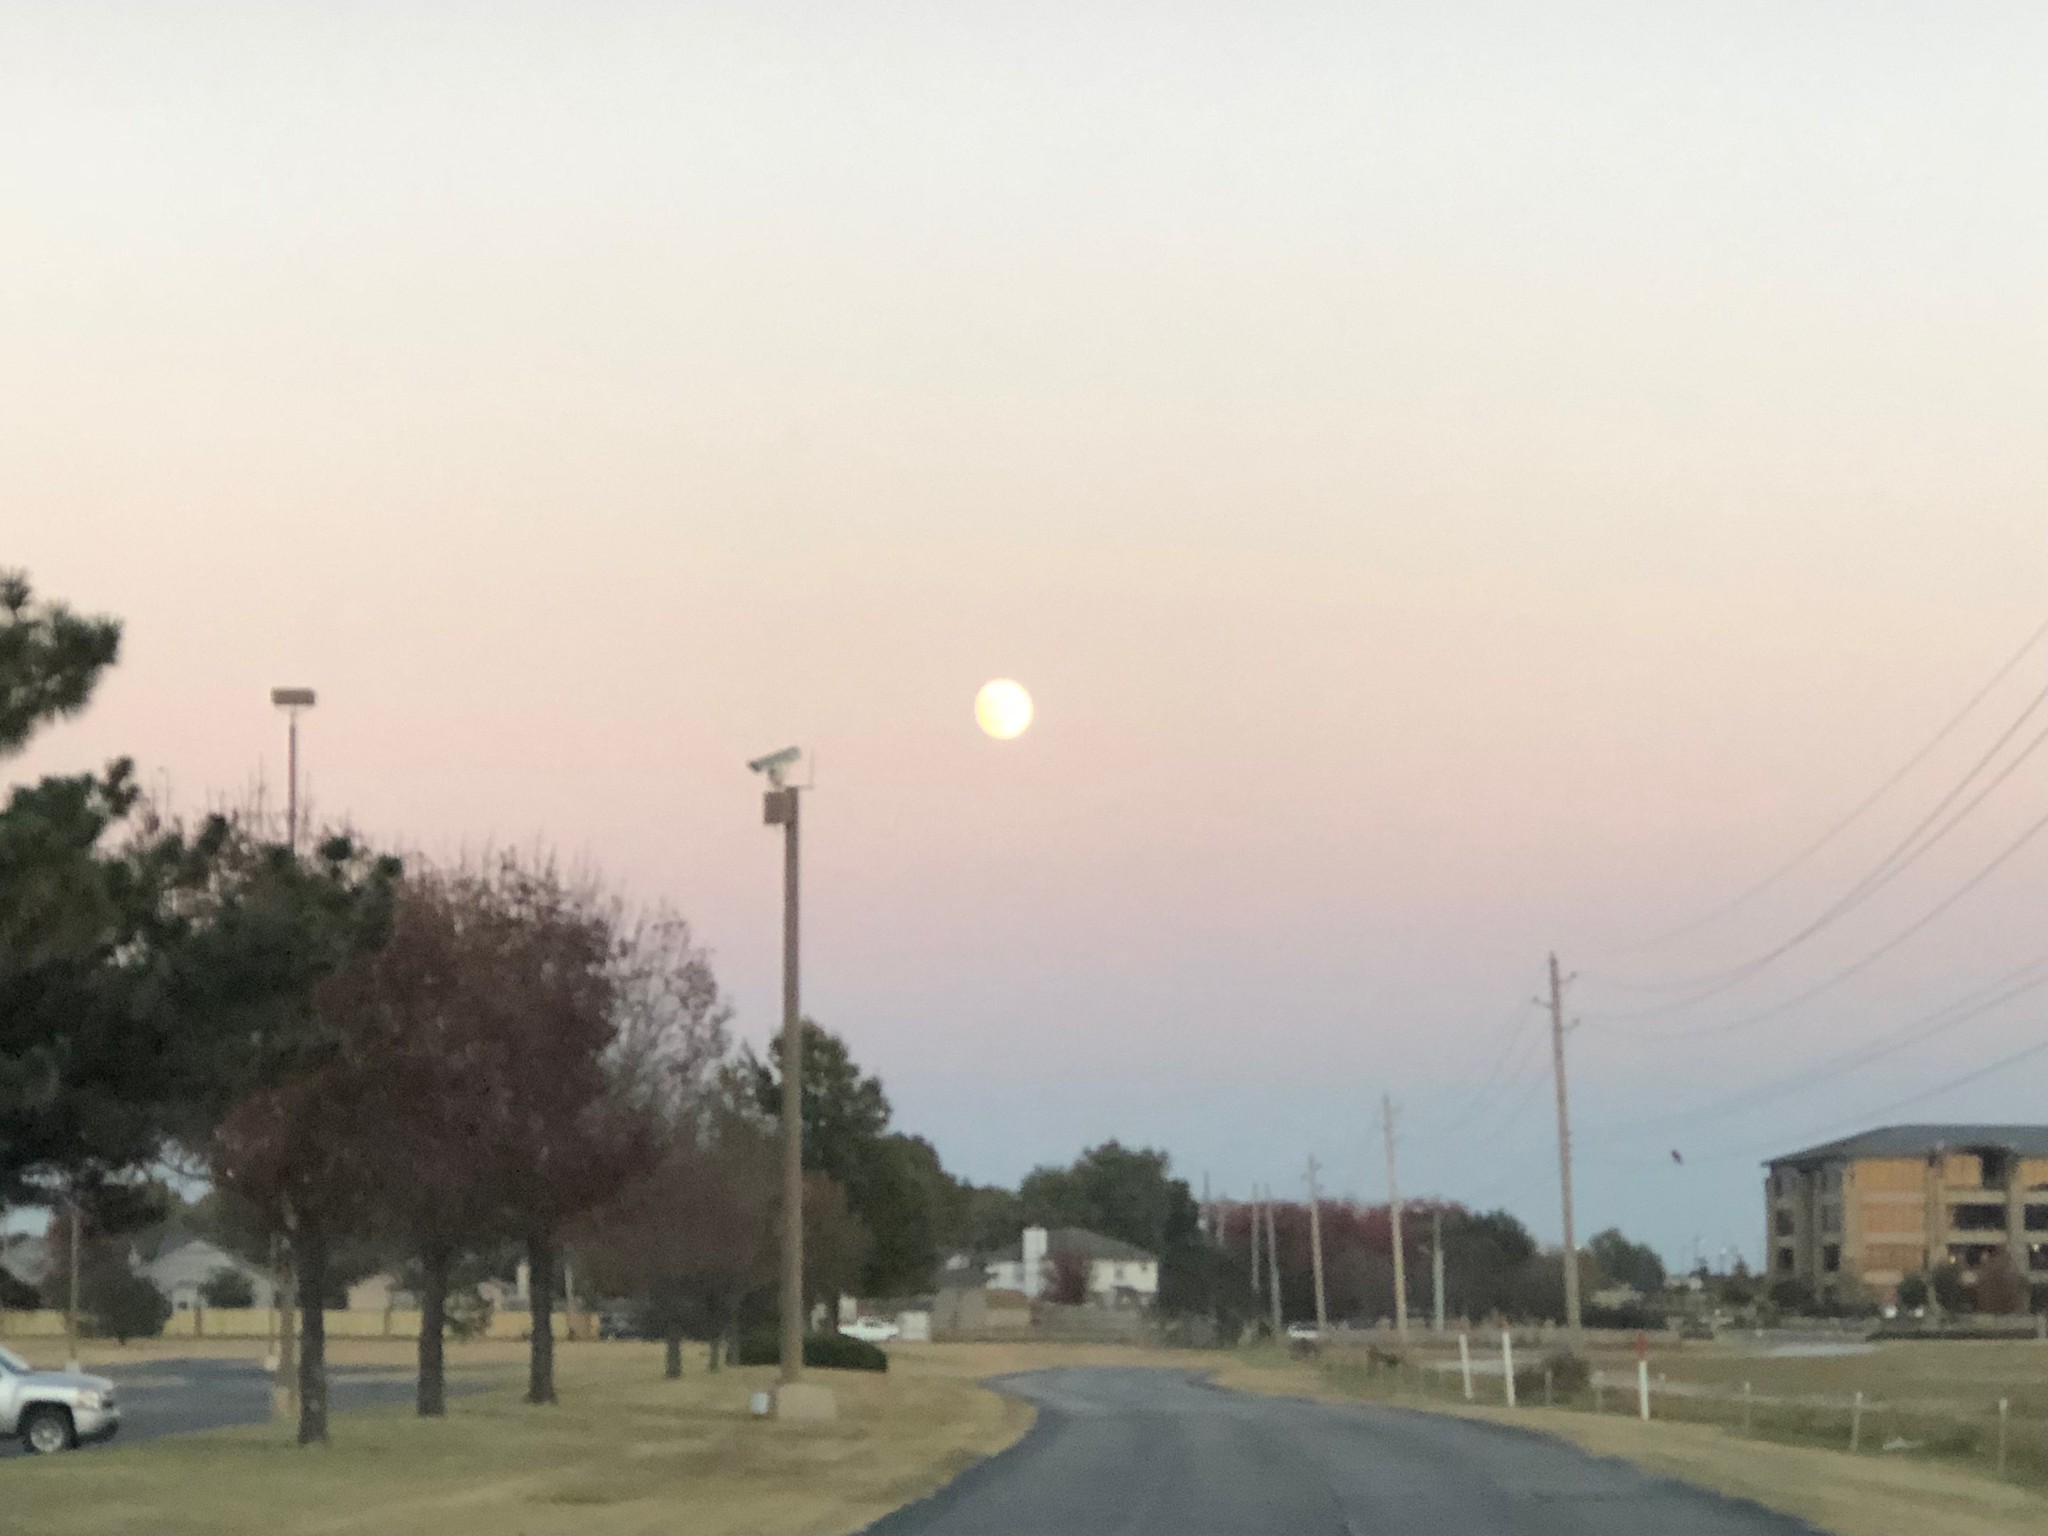 That moon looks like the sun